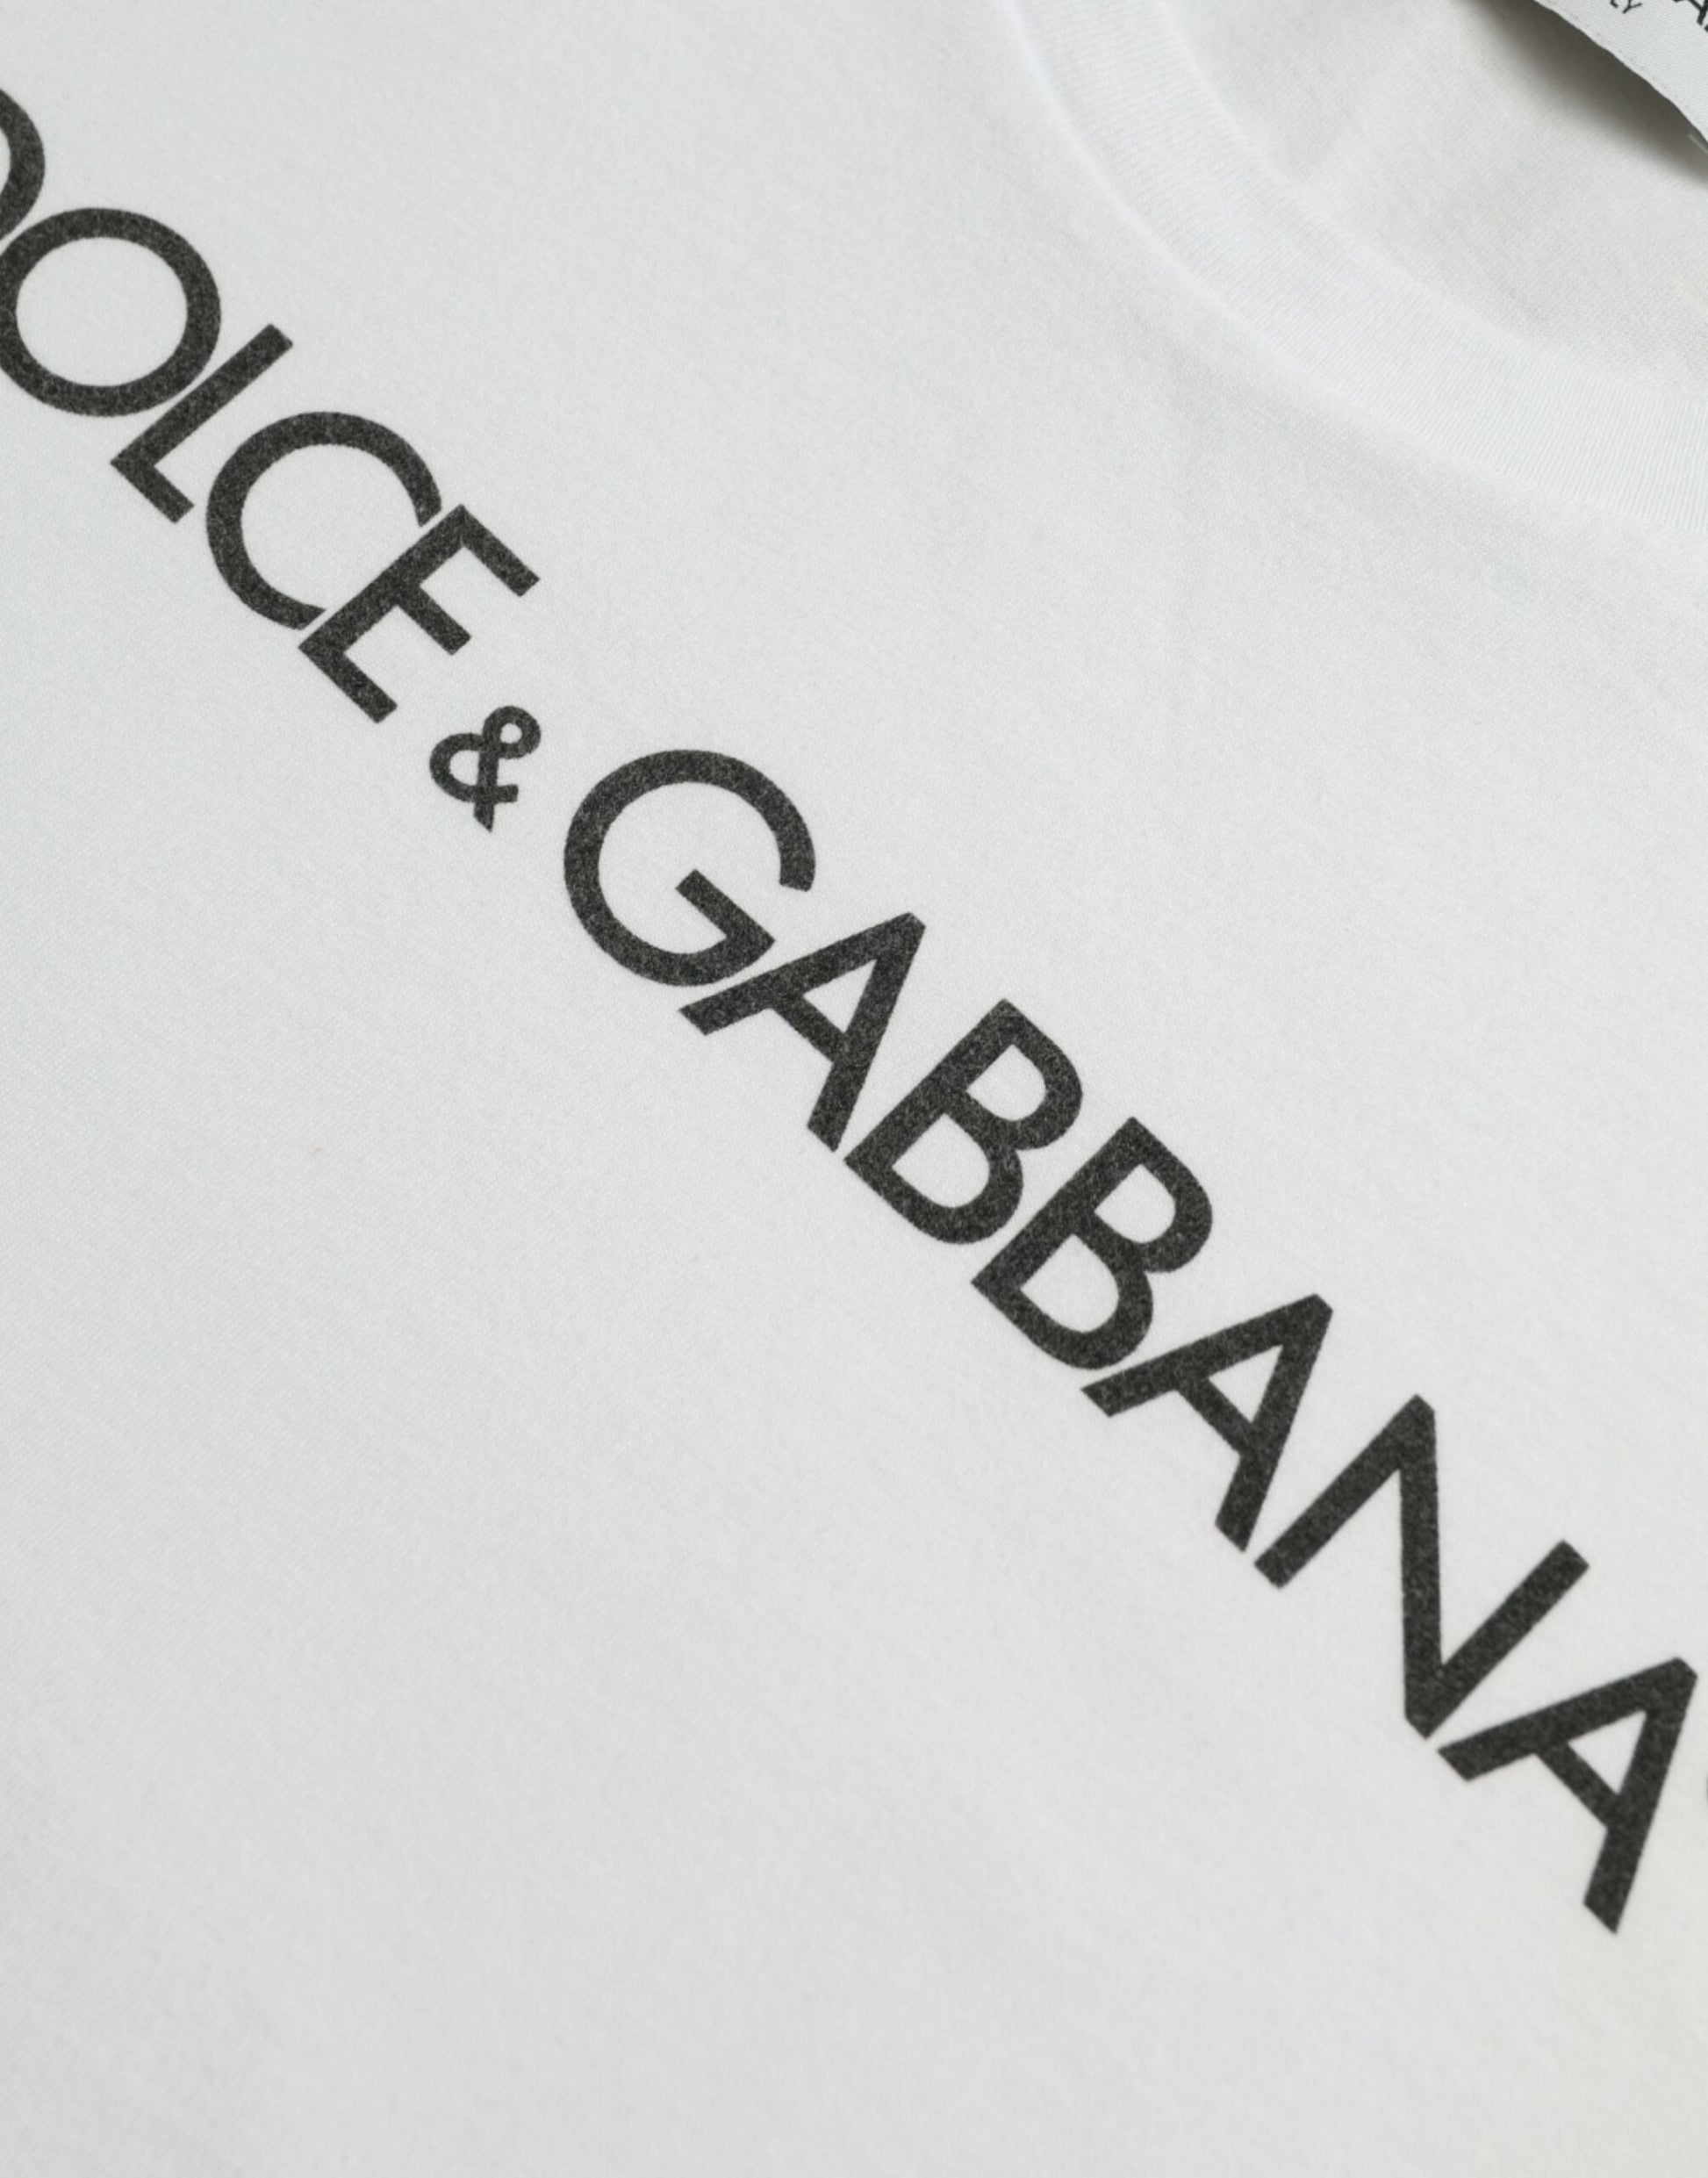 Dolce & Gabbana White Logo Print Cotton Crew Neck T-shirt | Fashionsarah.com